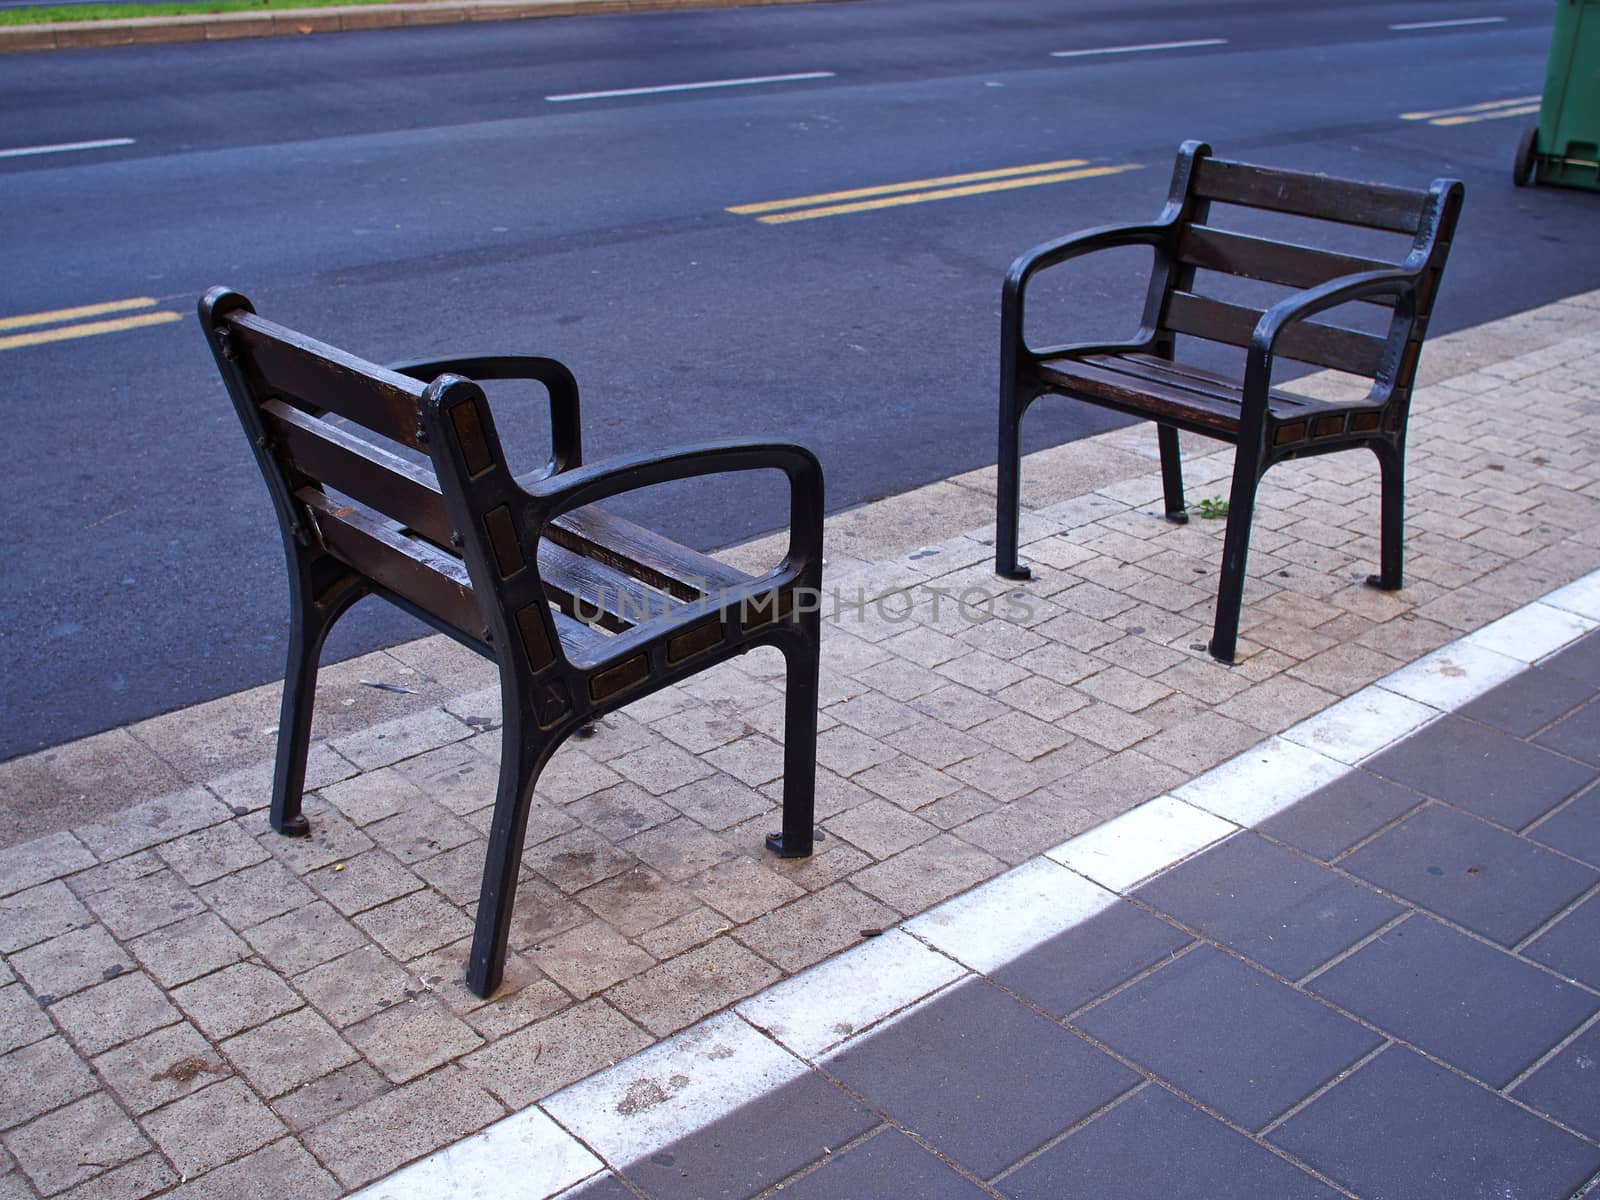 Modern design creative street furniture made of metal and wood